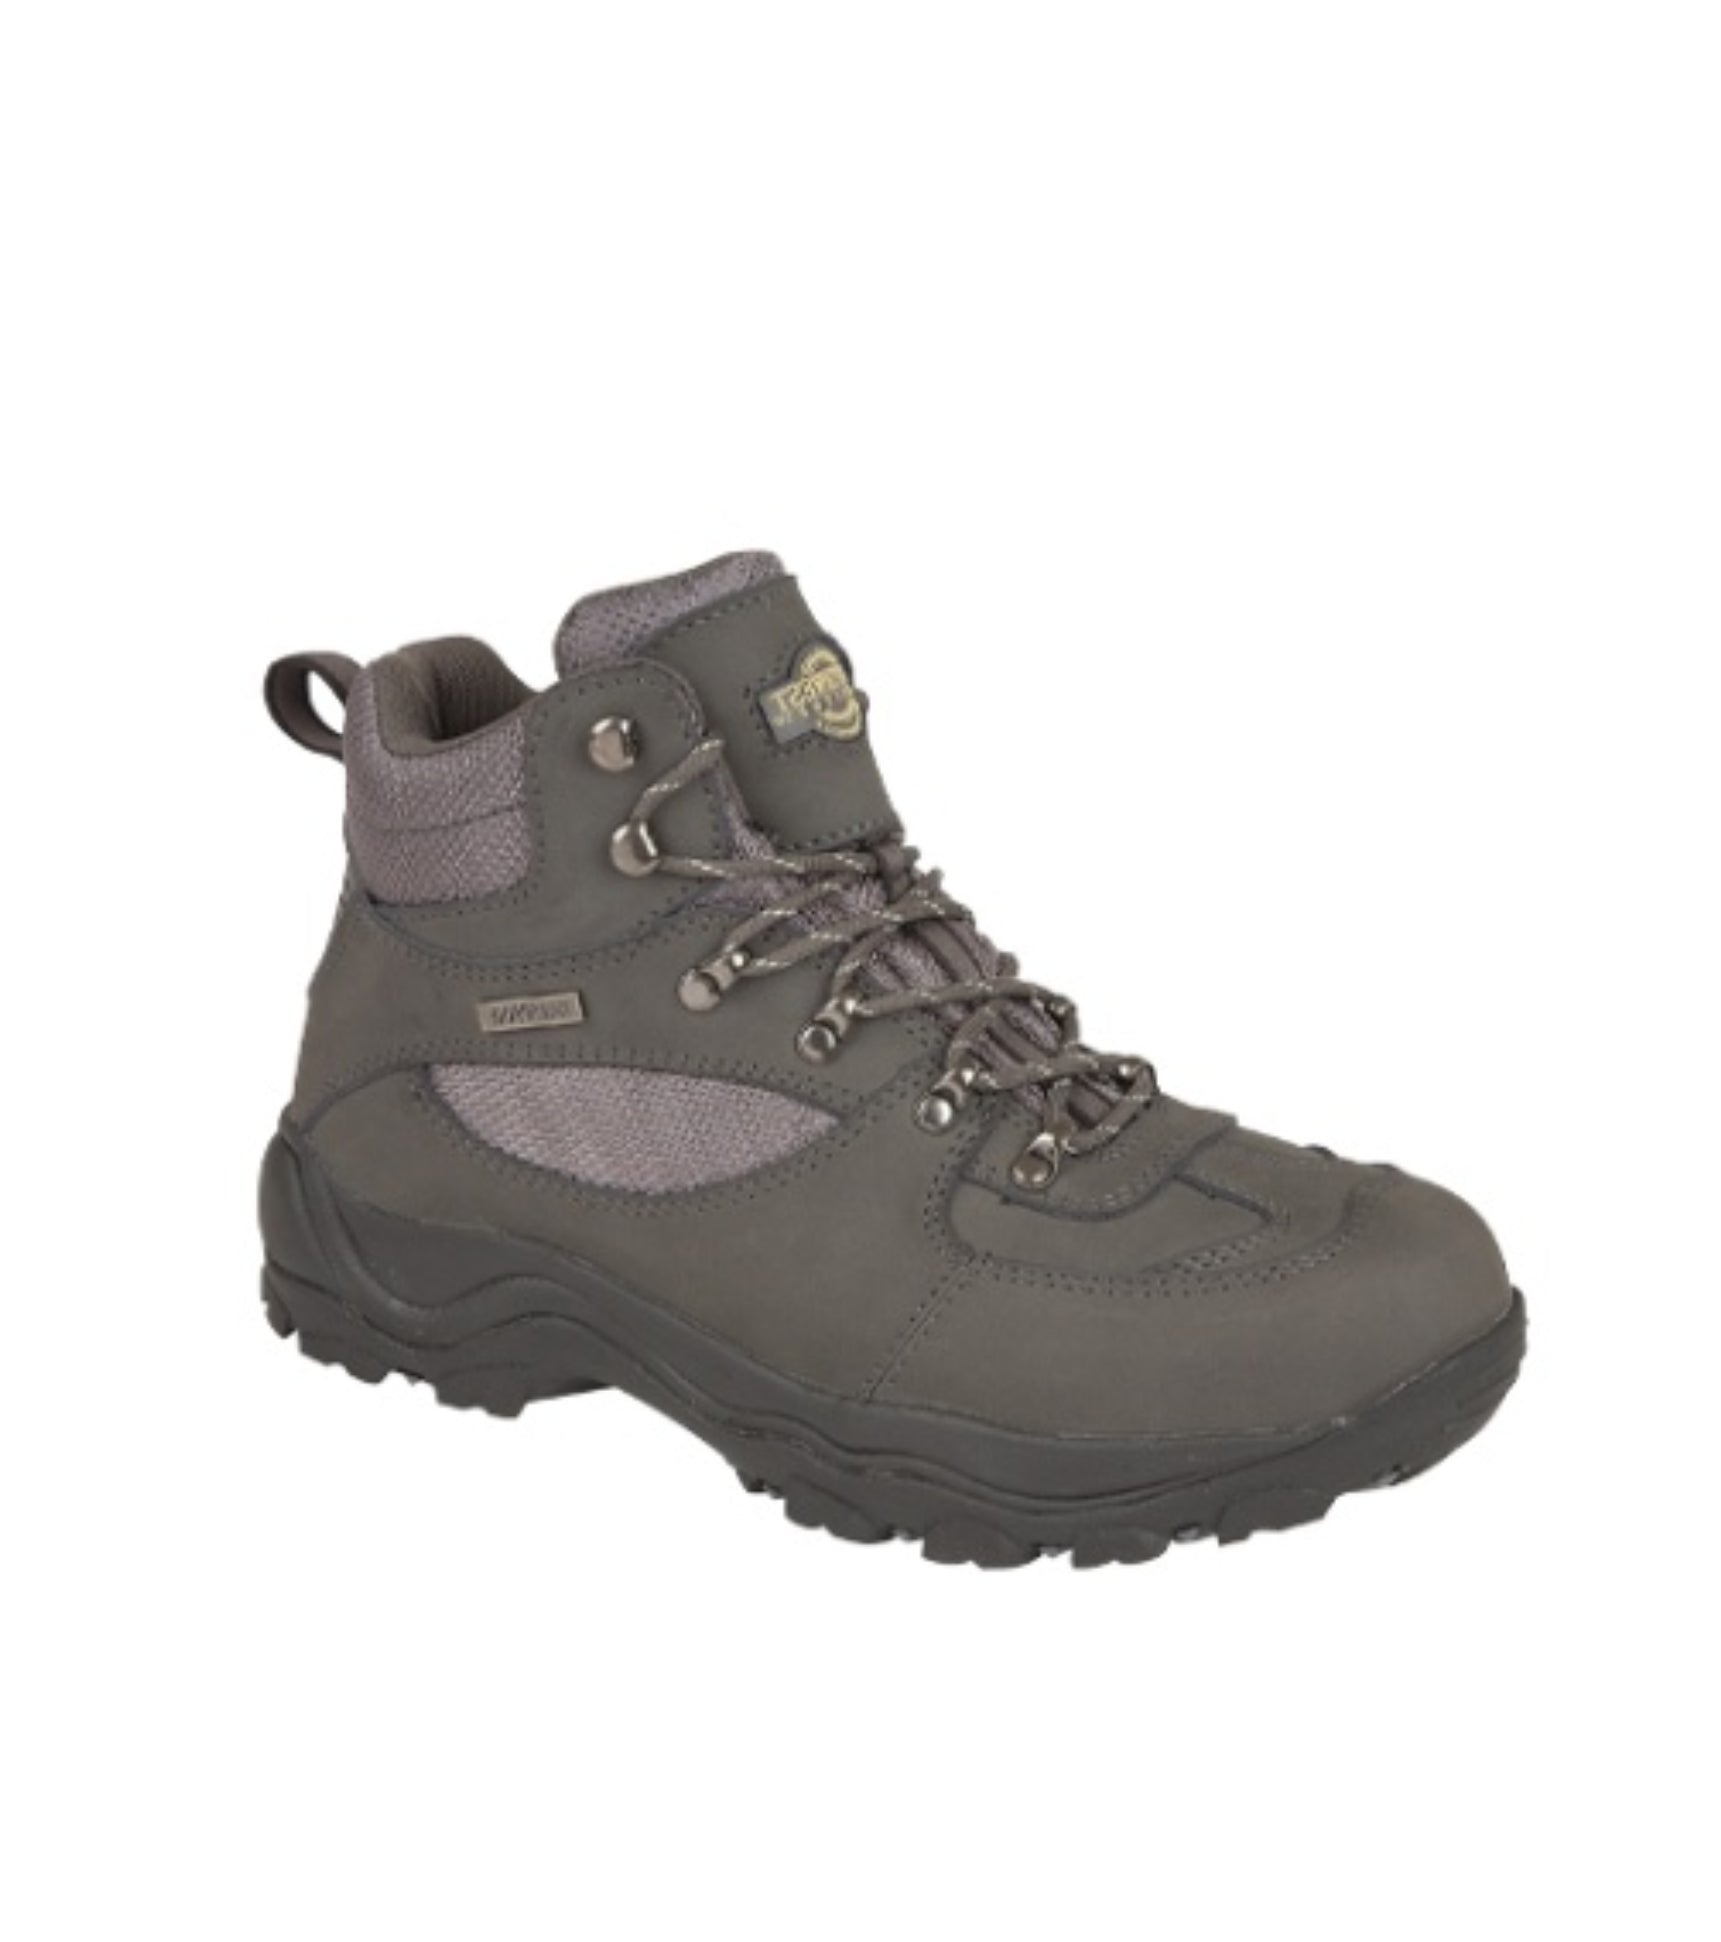 Men's Suede Leather Waterproof Walking Boots